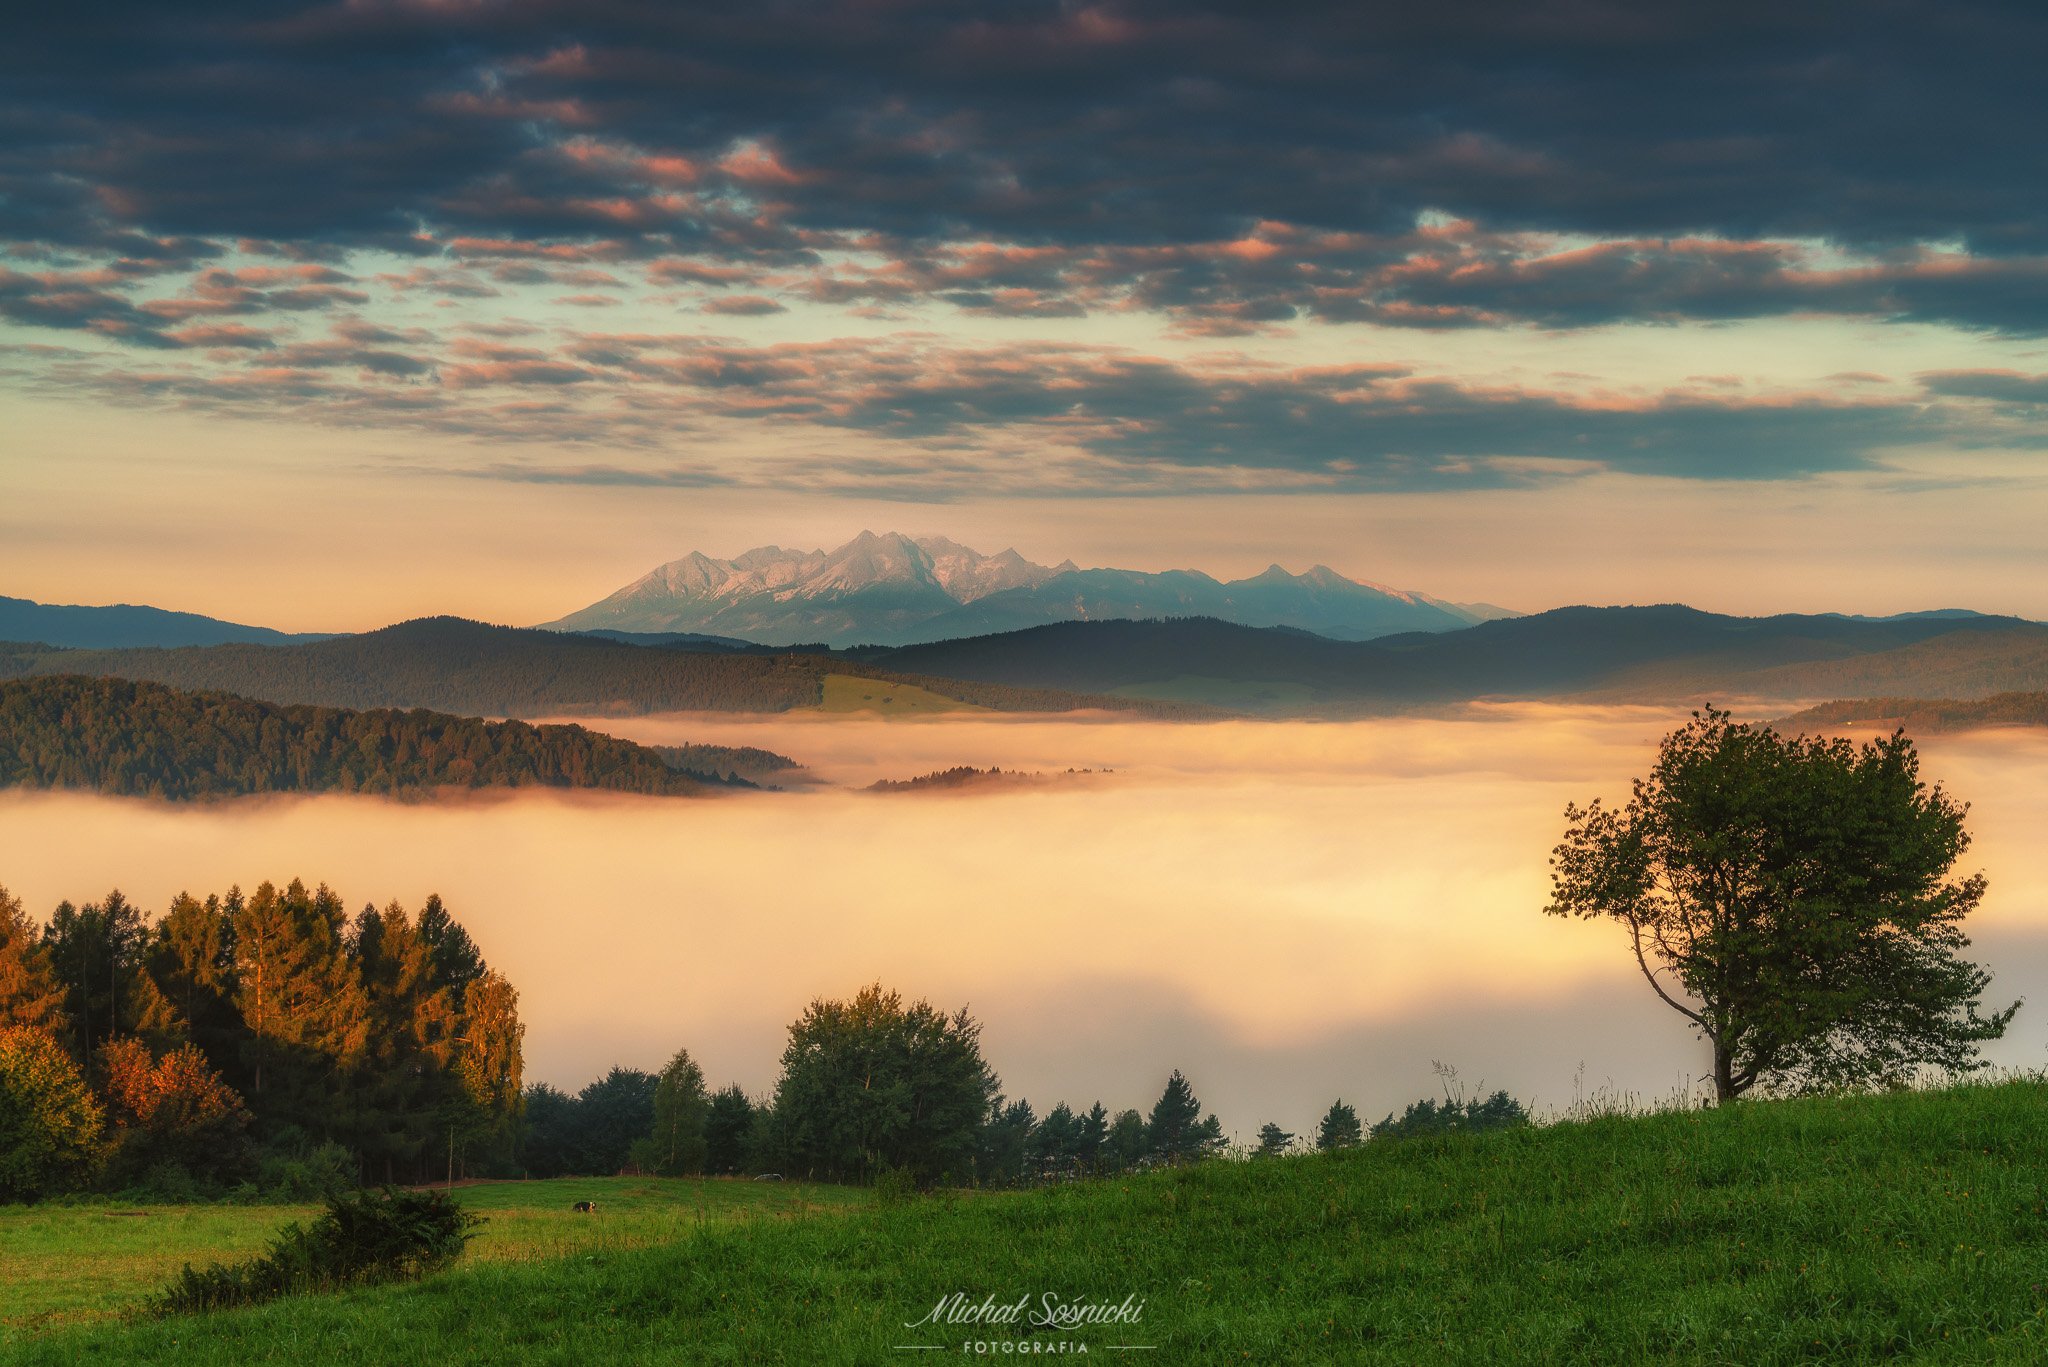 #poland #morning #sunrise #fog #landscape #pentax #benro #benq, Michał Sośnicki